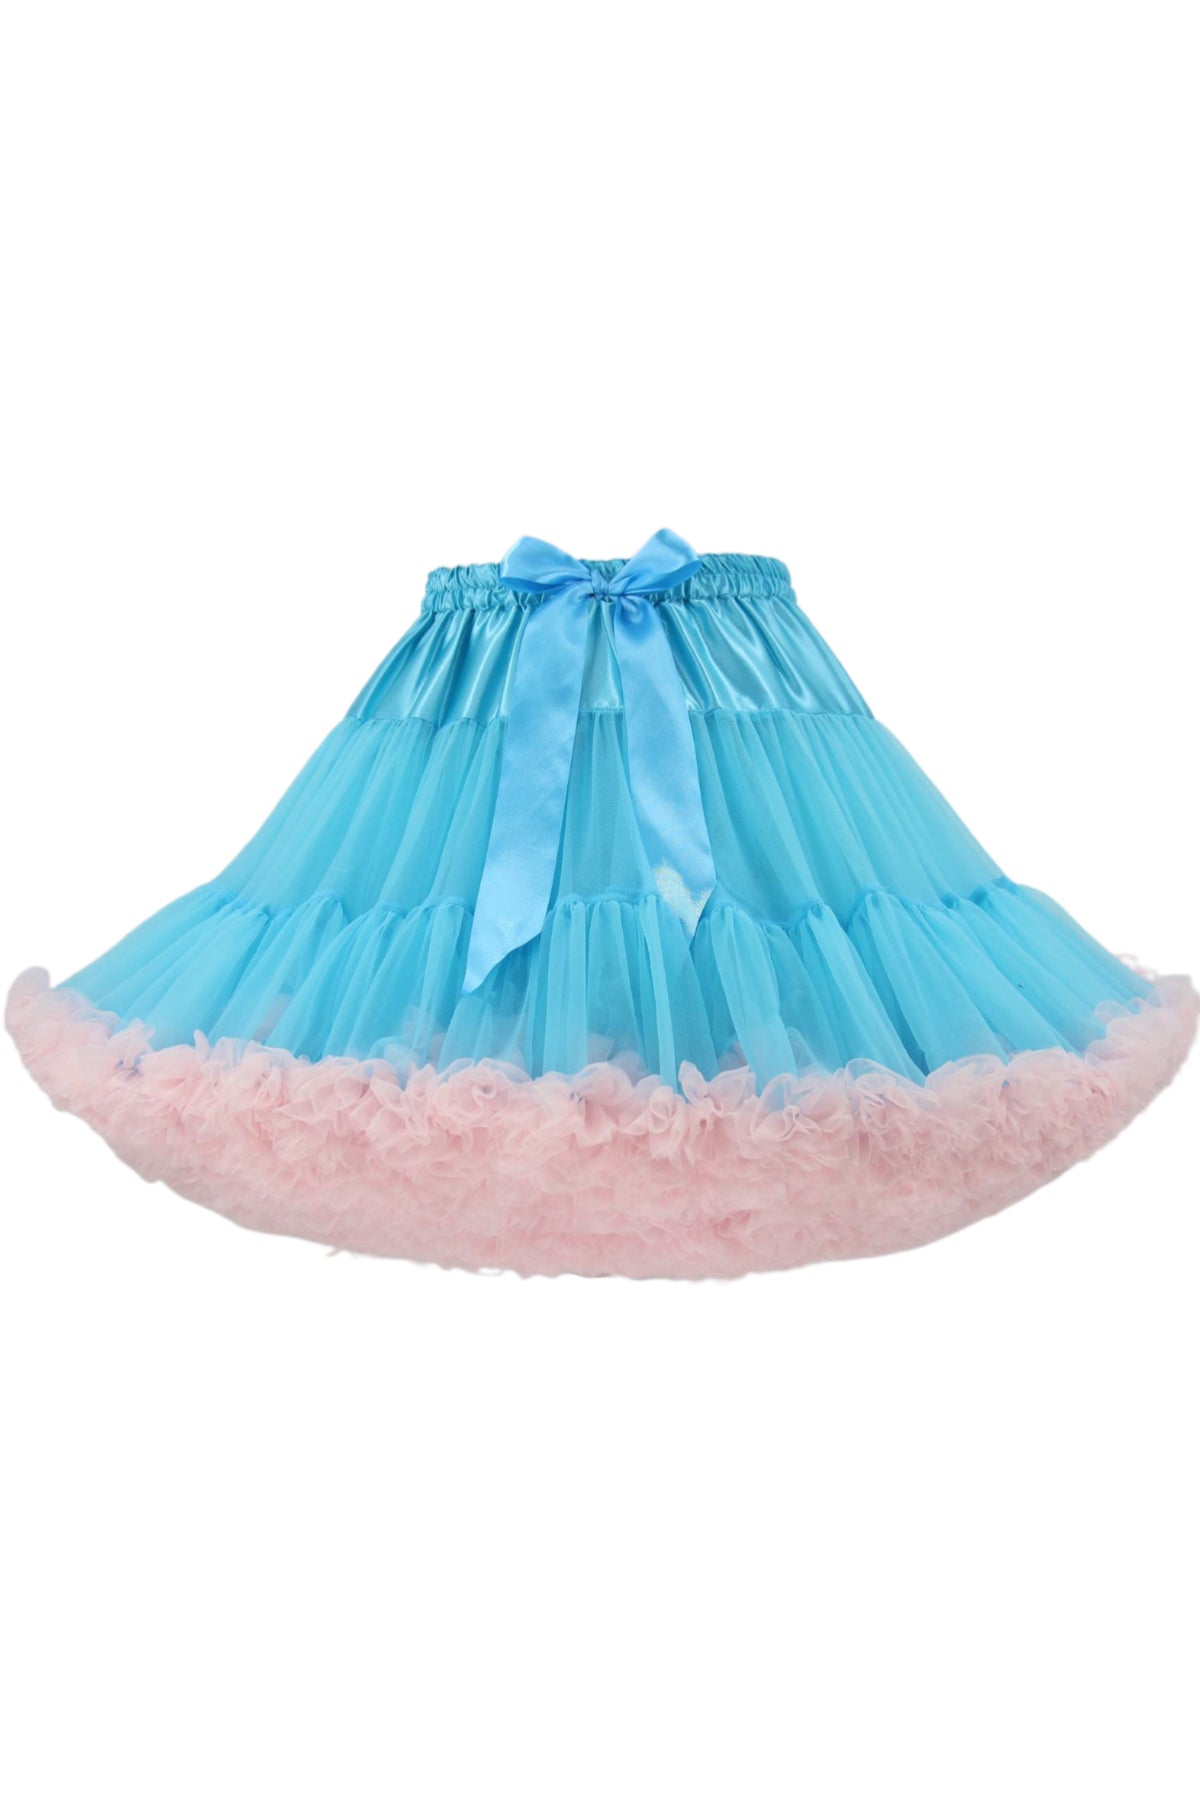 Blue Tulle Tutu Min Petticoat with Pink Hemline